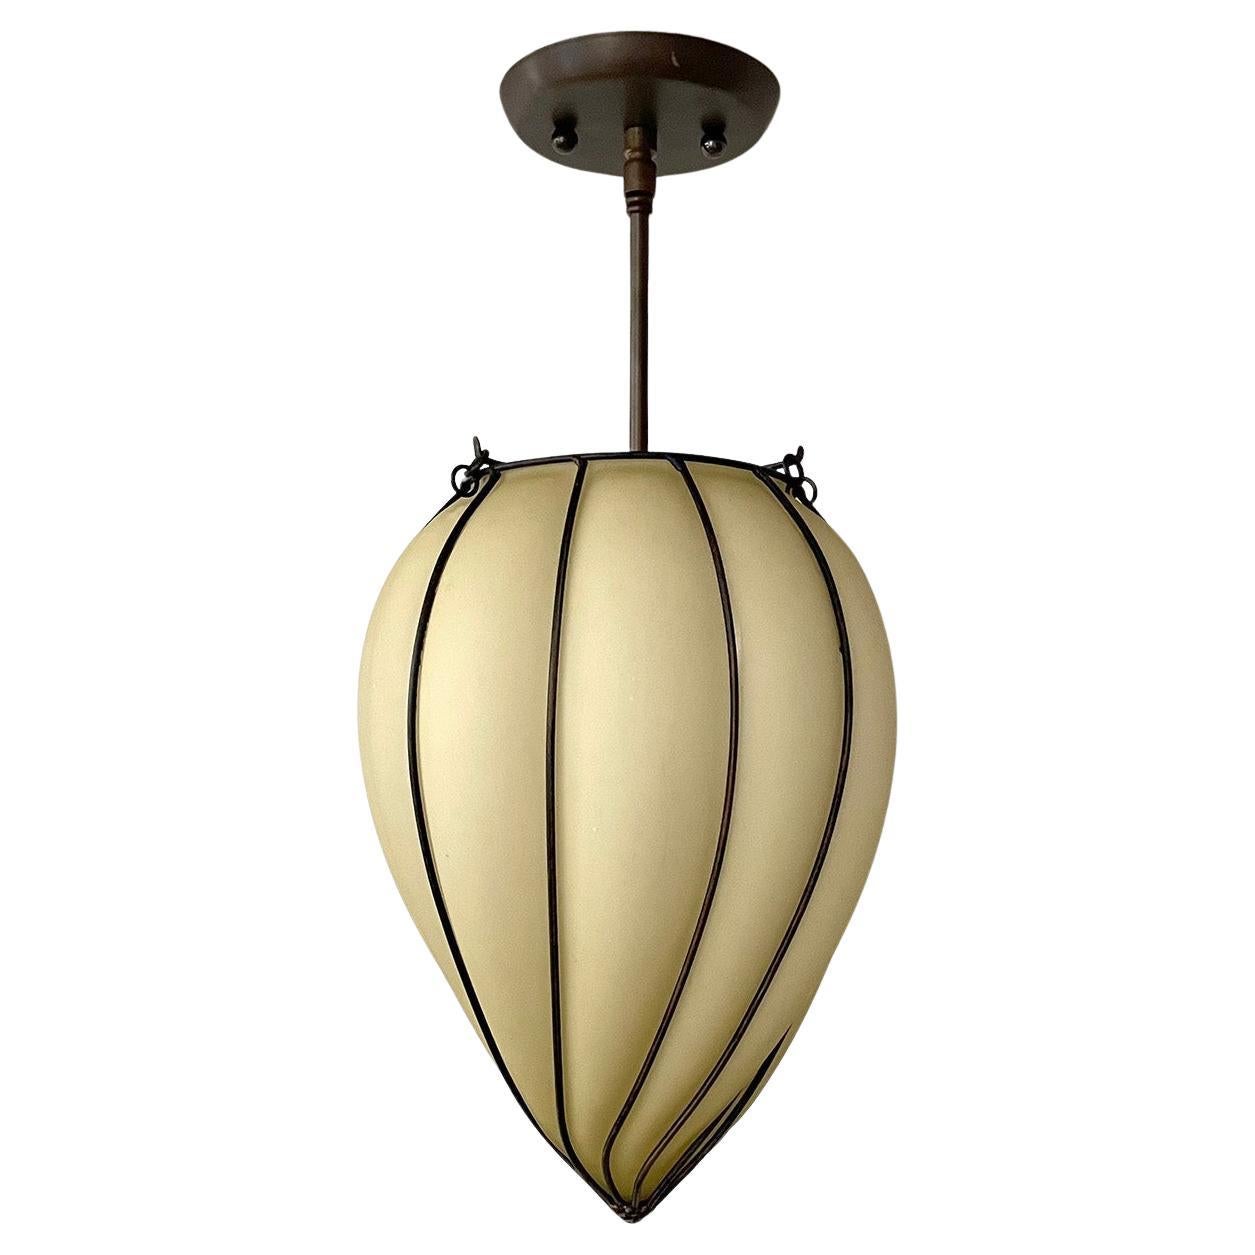 French Art Deco Teardrop Pendant Ceiling Light For Sale